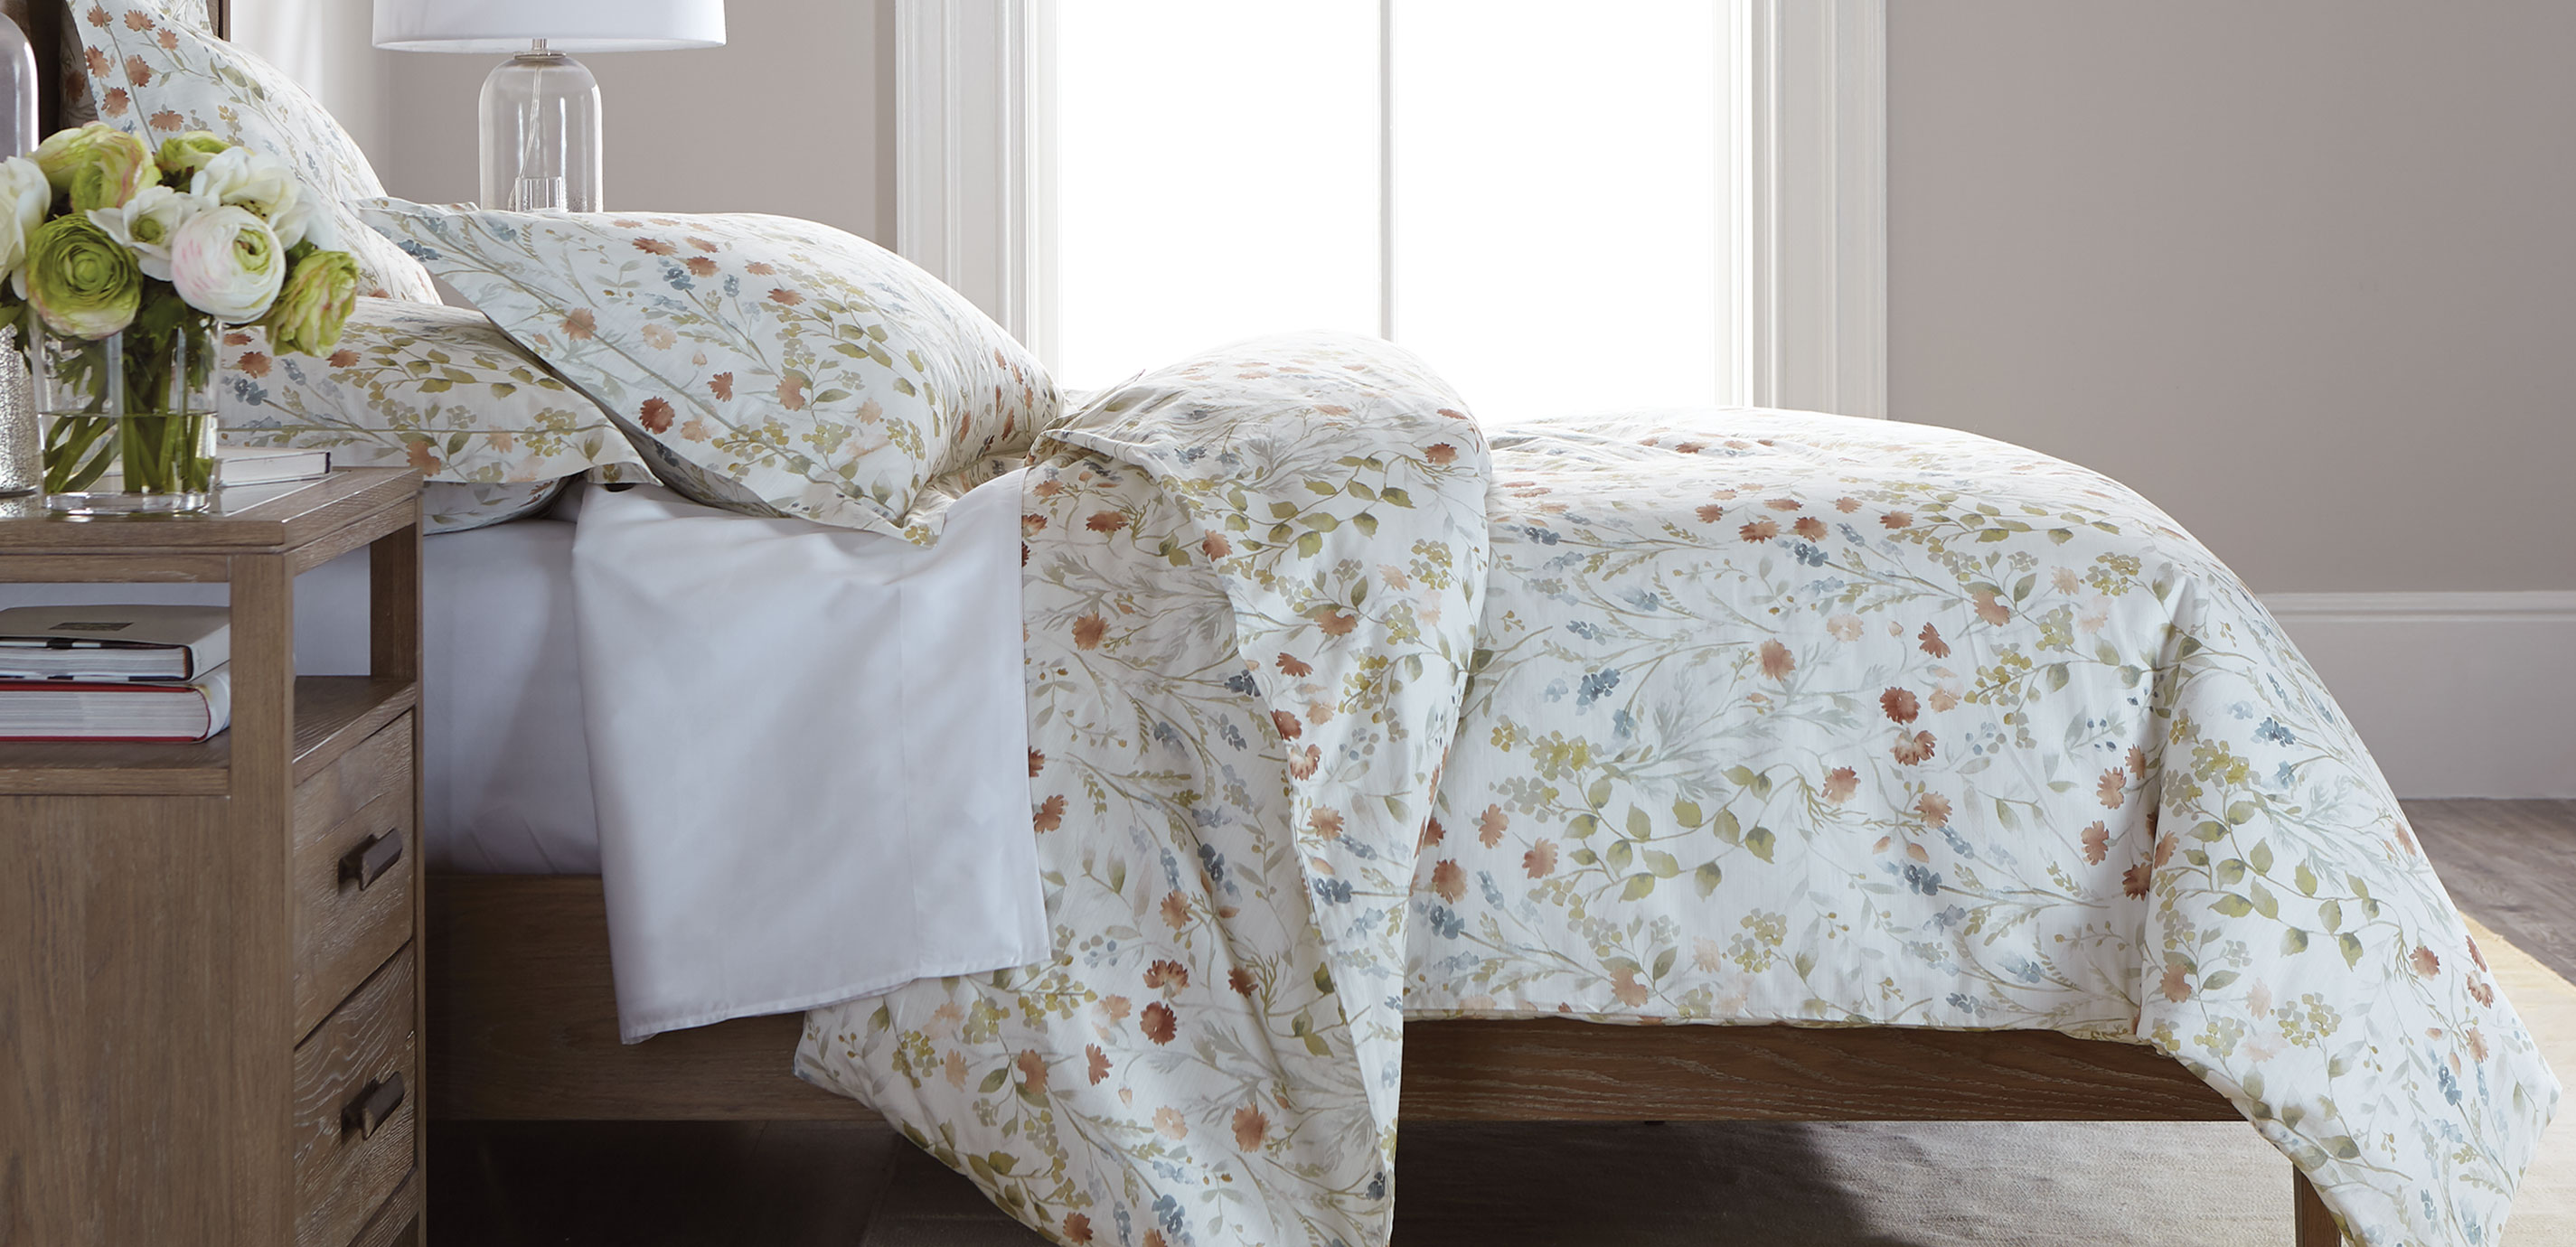 ClearloveWL Bed Linen Sets, Modern Marble Print Bed Reversible